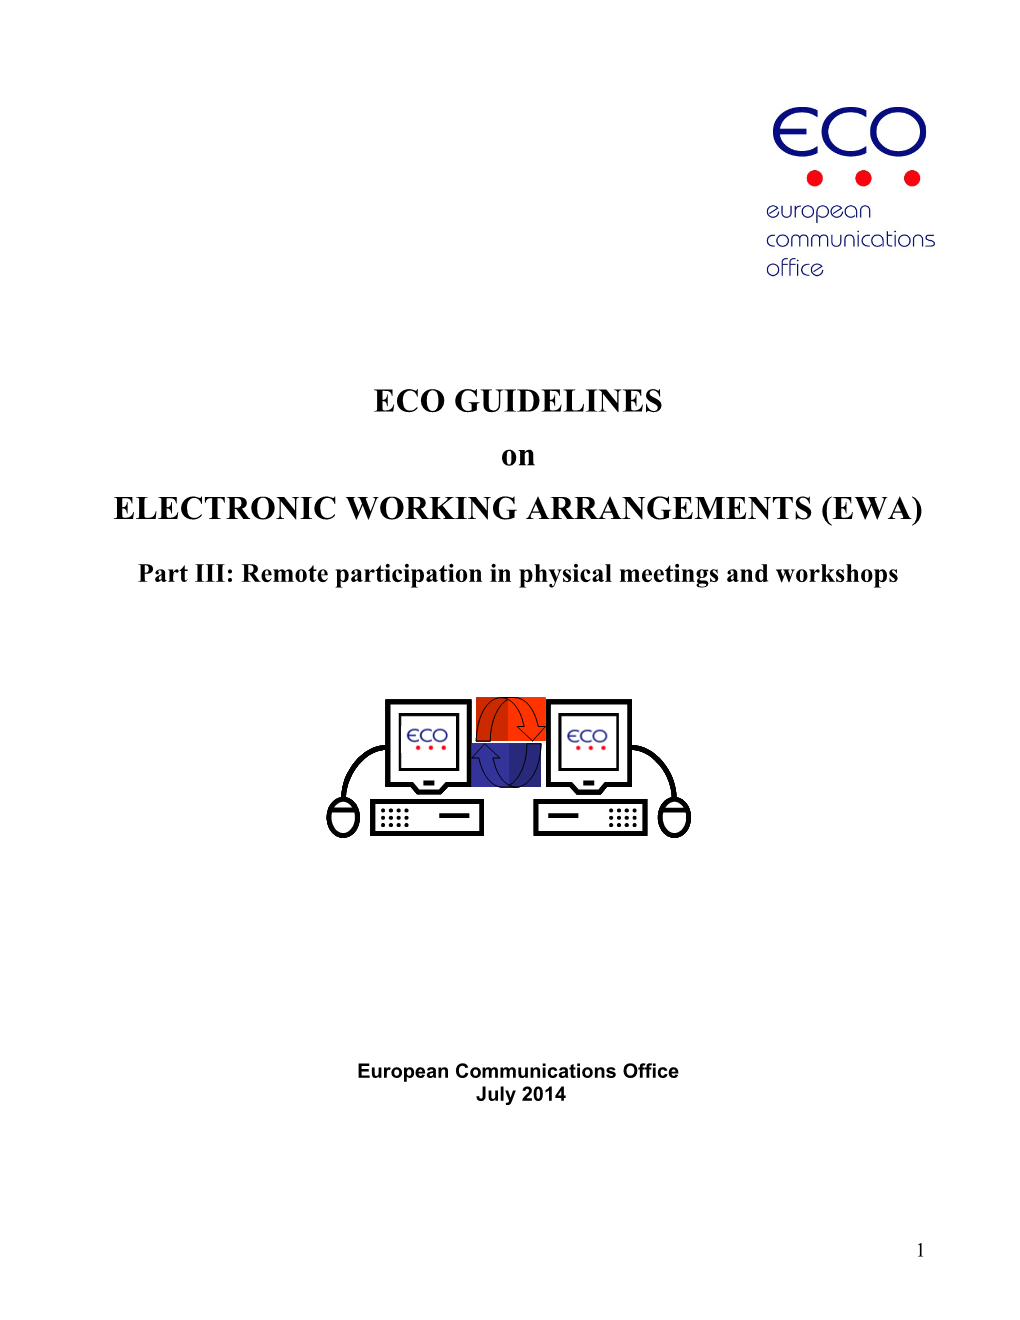 Electronic Working Arrangements (Ewa)